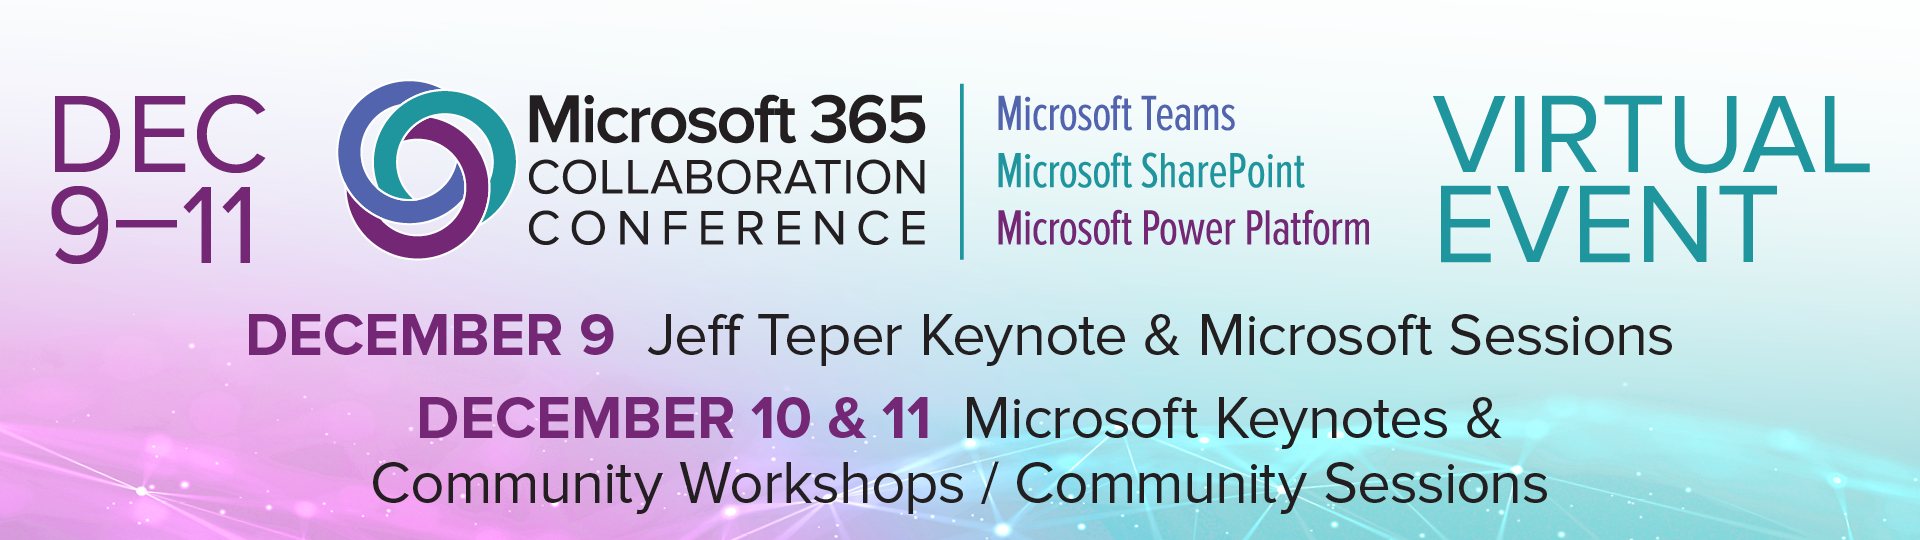 Microsoft 365 Collaboration Conference Virtual Event